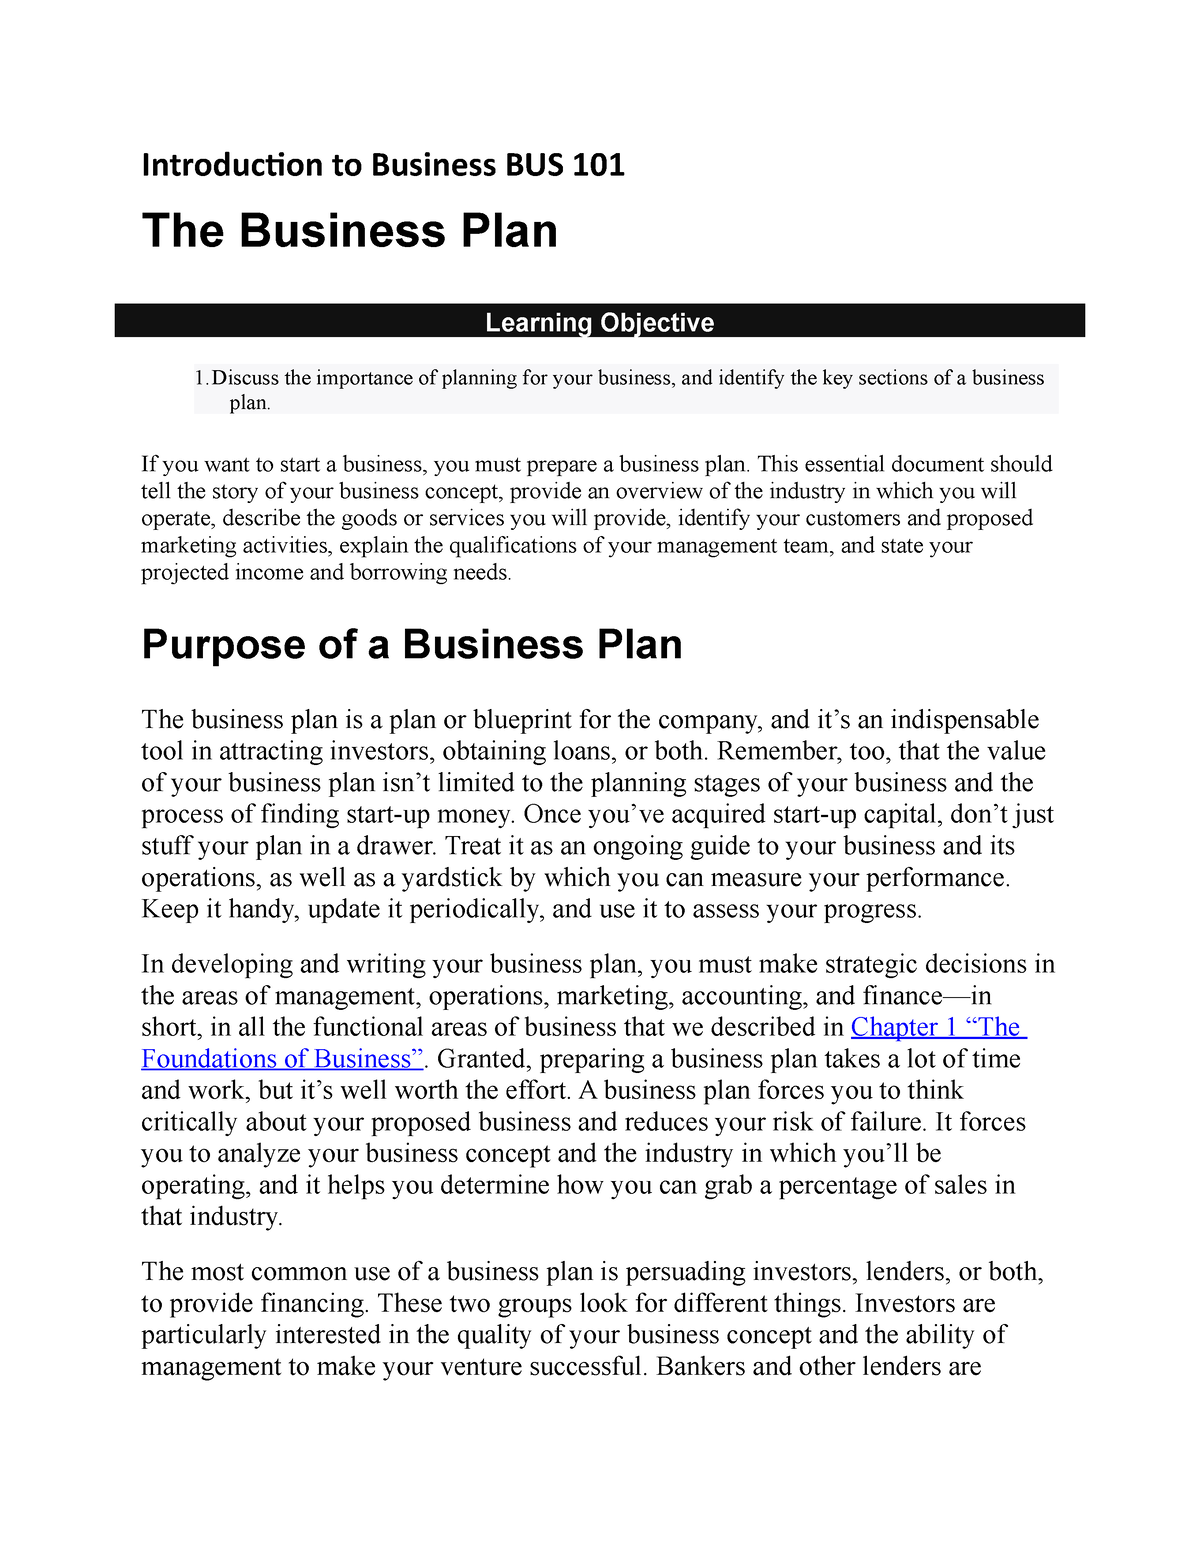 business plan bus 101